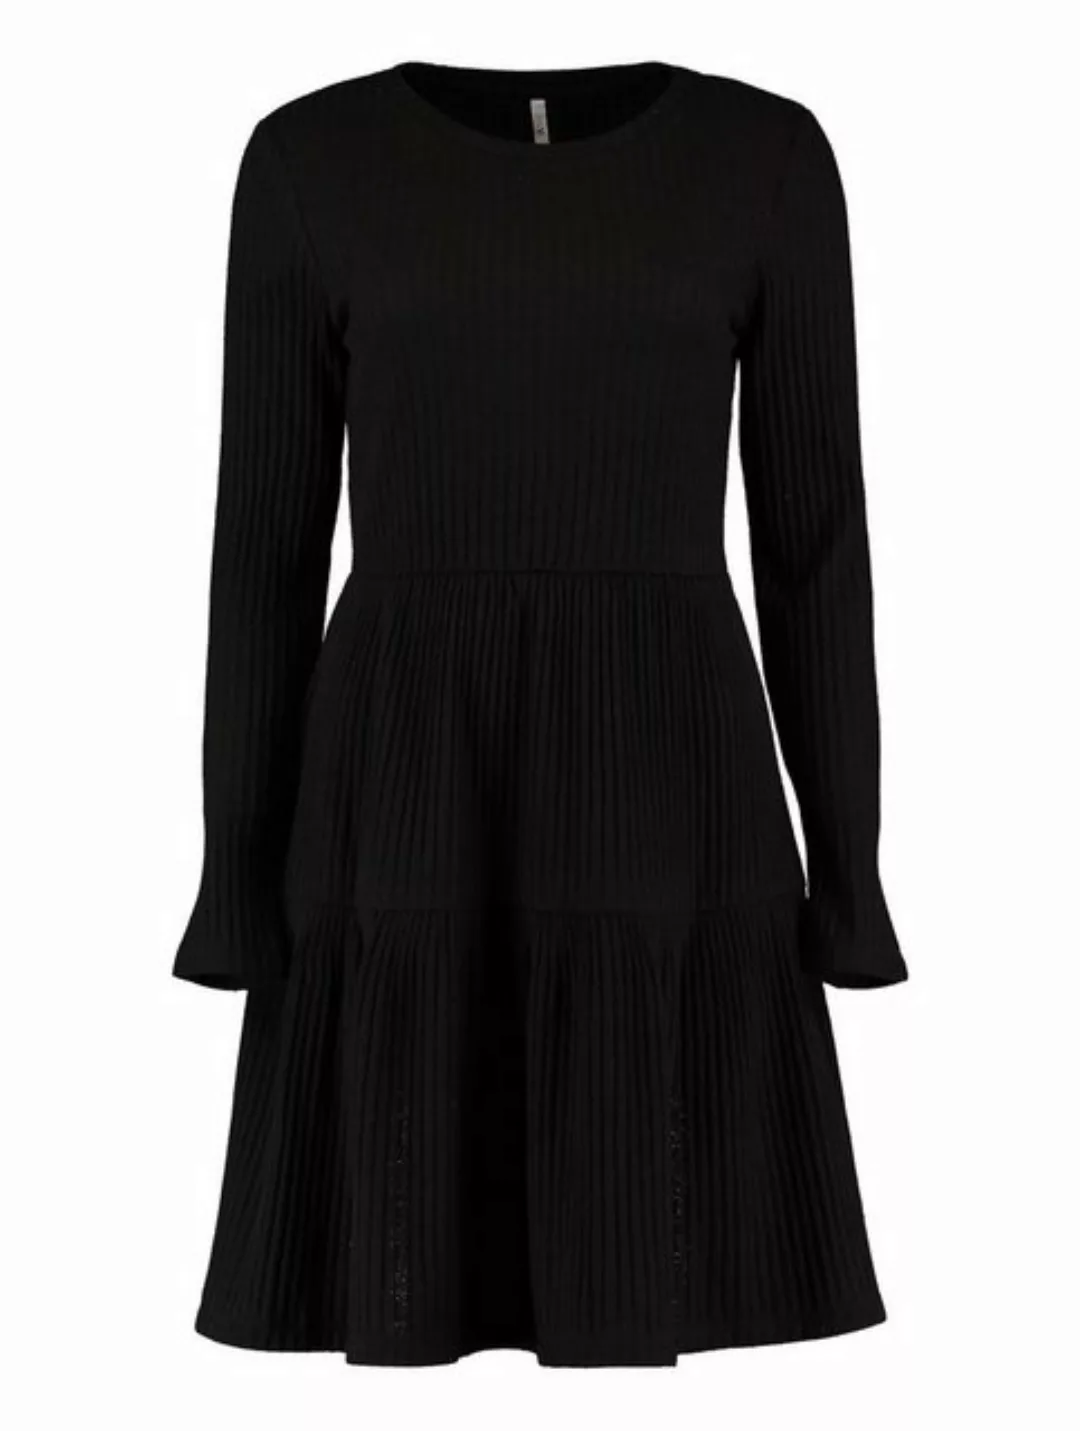 HaILY’S Shirtkleid Langarm Kleid Mini Ripp Blusen Dress Id44a (knielang) 59 günstig online kaufen